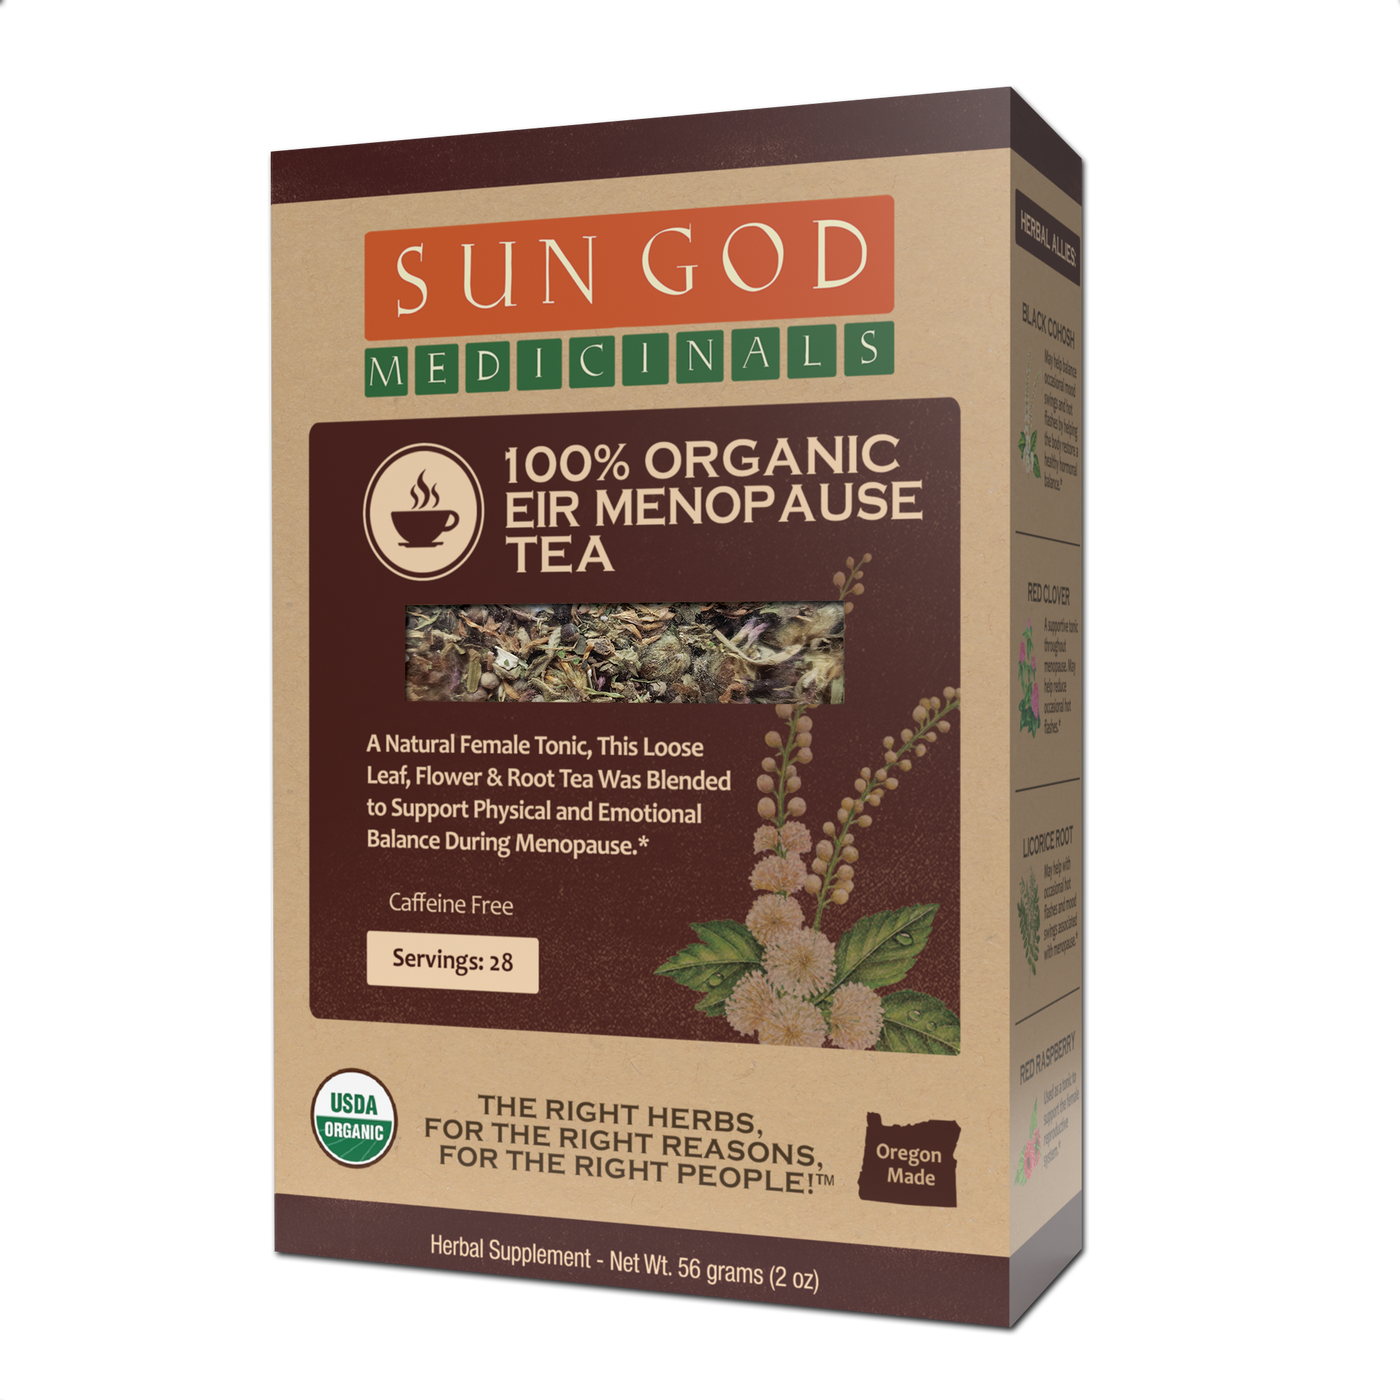 Eir Menopause Organic Herbal Tea - Sun God Medicinals